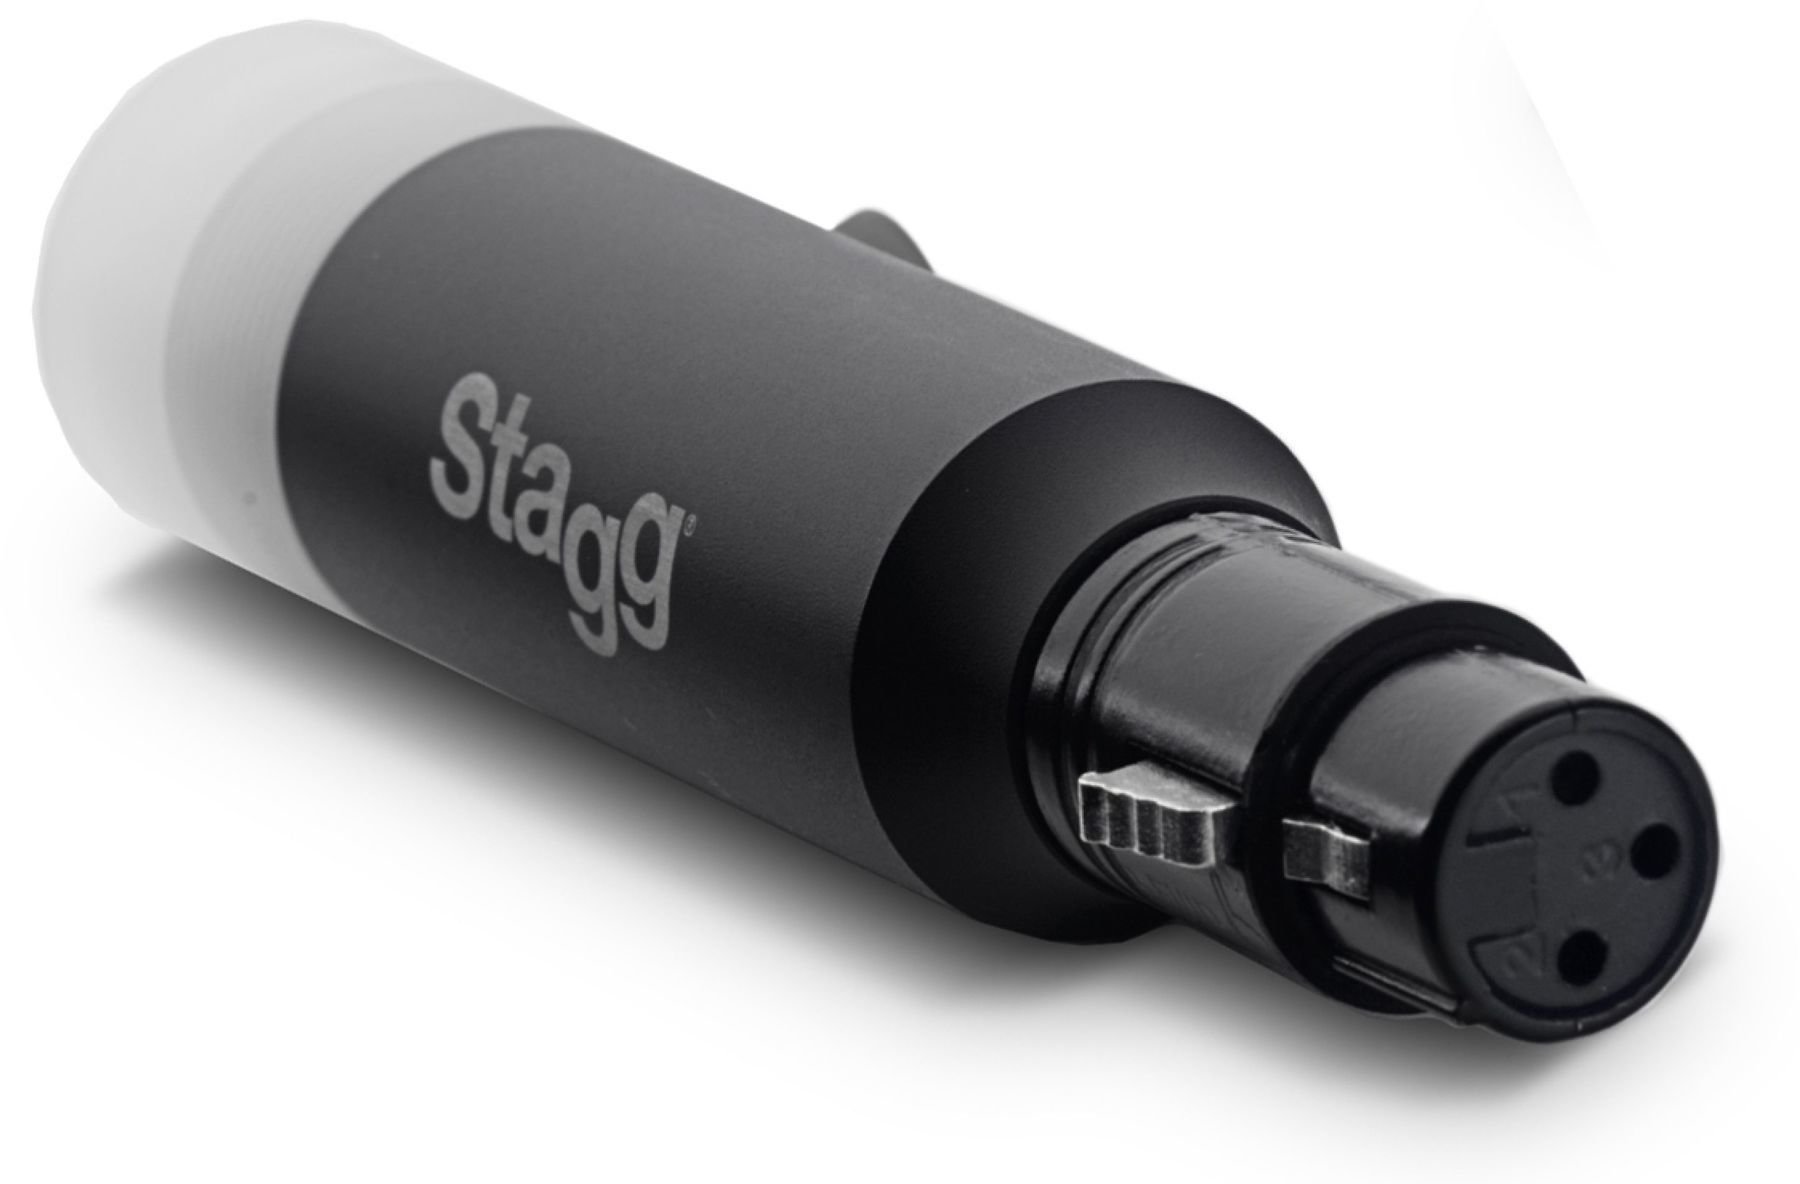 Draadloos systeem voor lichtregeling Stagg SLI-STICK24BR-2 Draadloos systeem voor lichtregeling